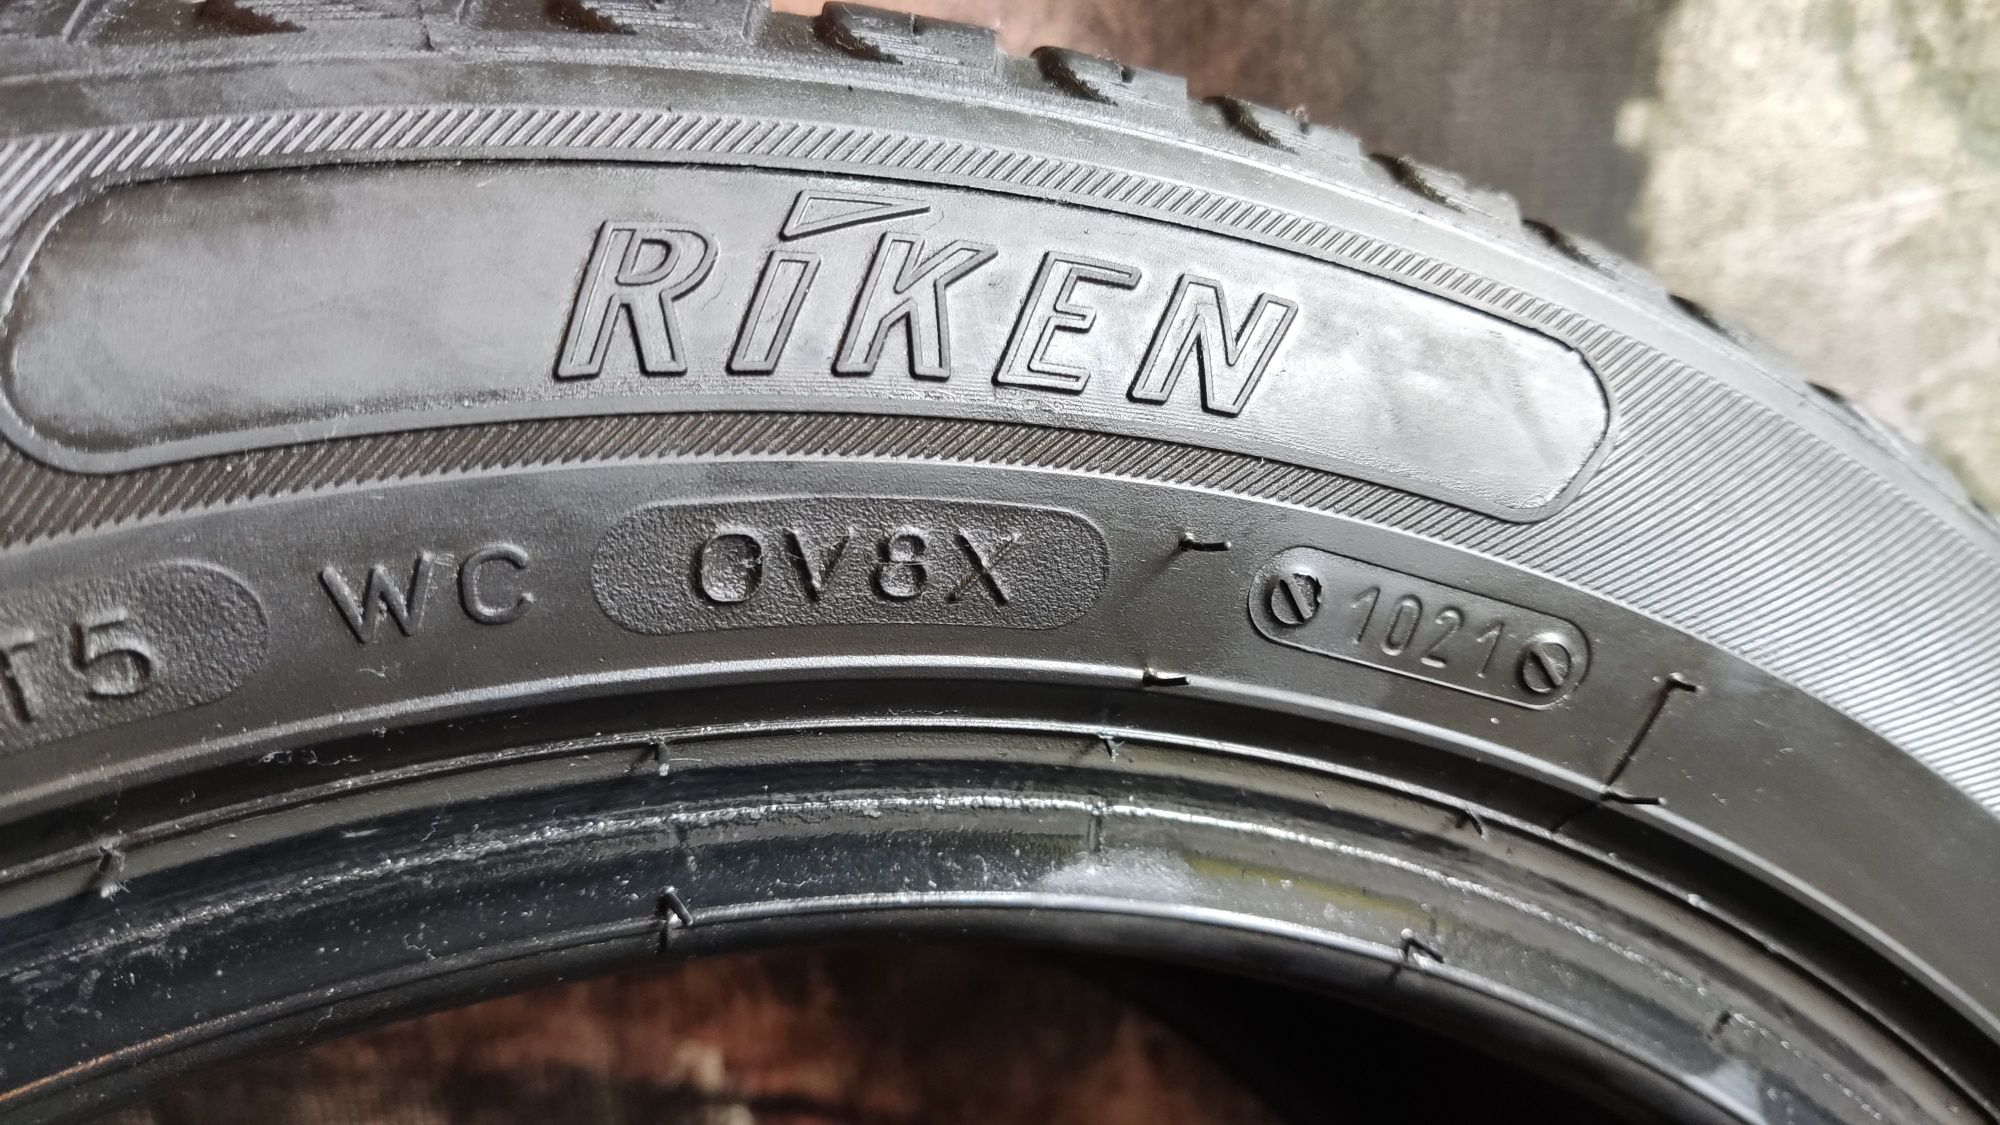 2бр всесезонни гуми 205/55/16 Riken, dot21,6.8 mm грайфер 
dot 1021
6.